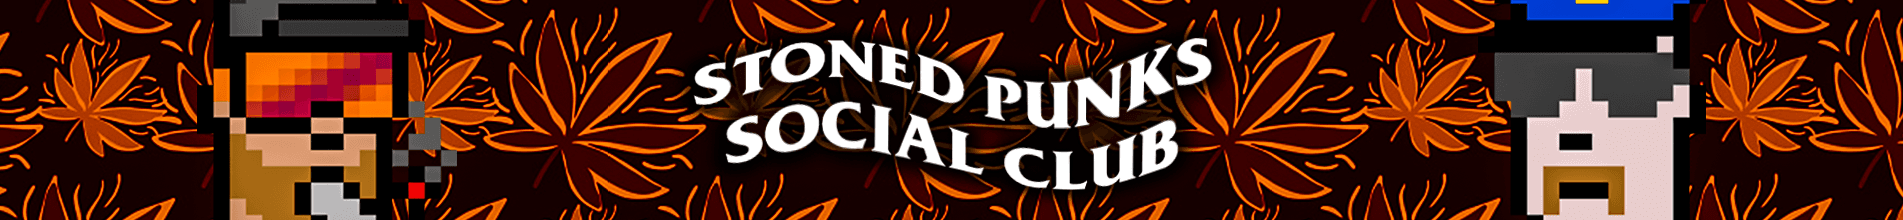 StonedPunksSocialClub1 banner